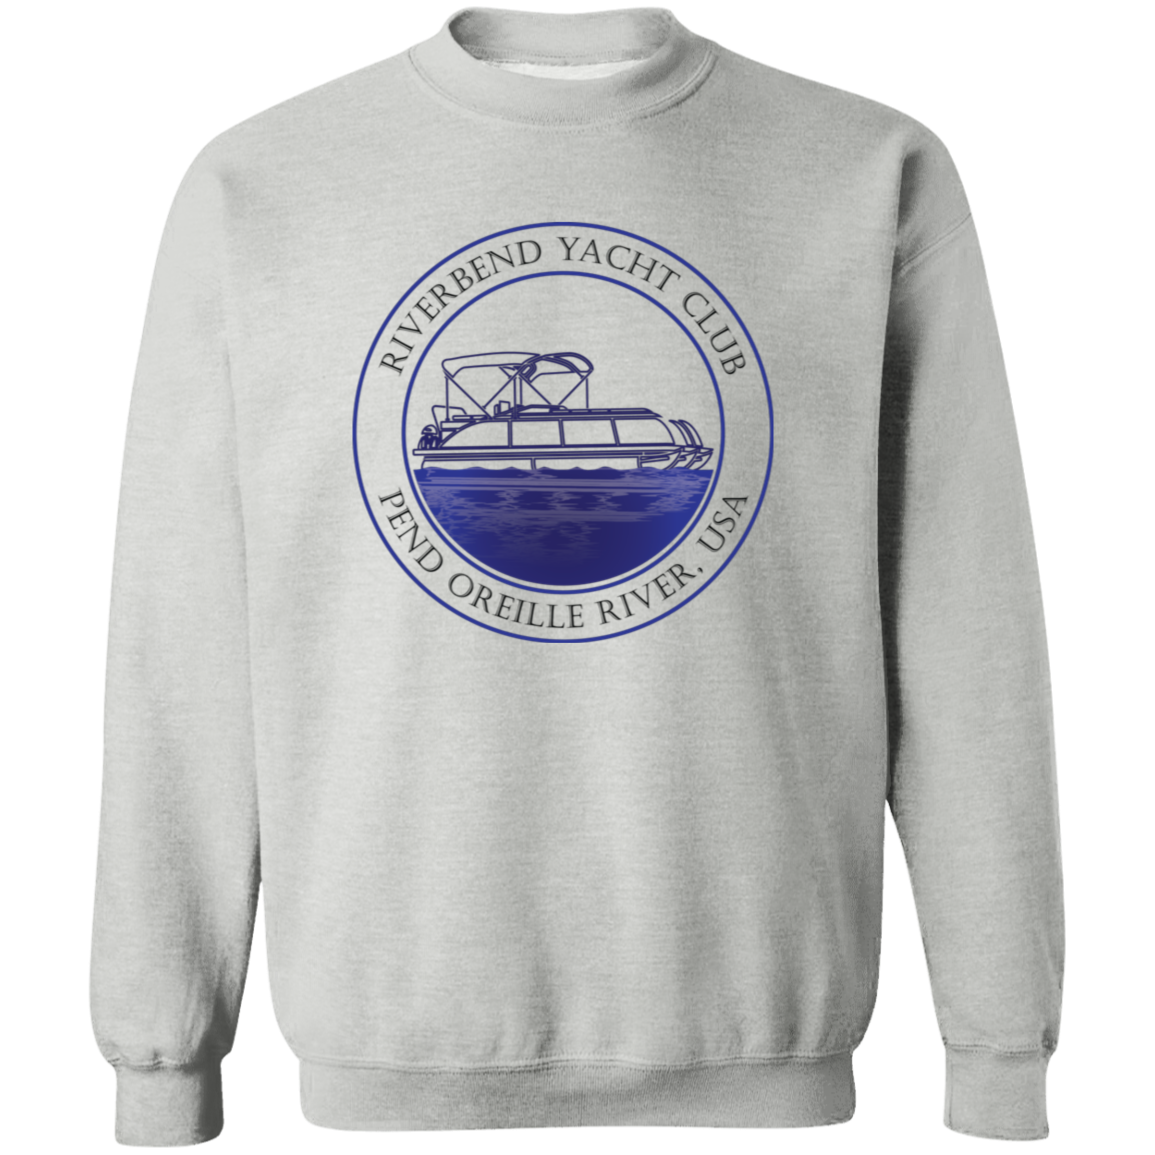 Riverbend Yacht Club - Sweatshirt